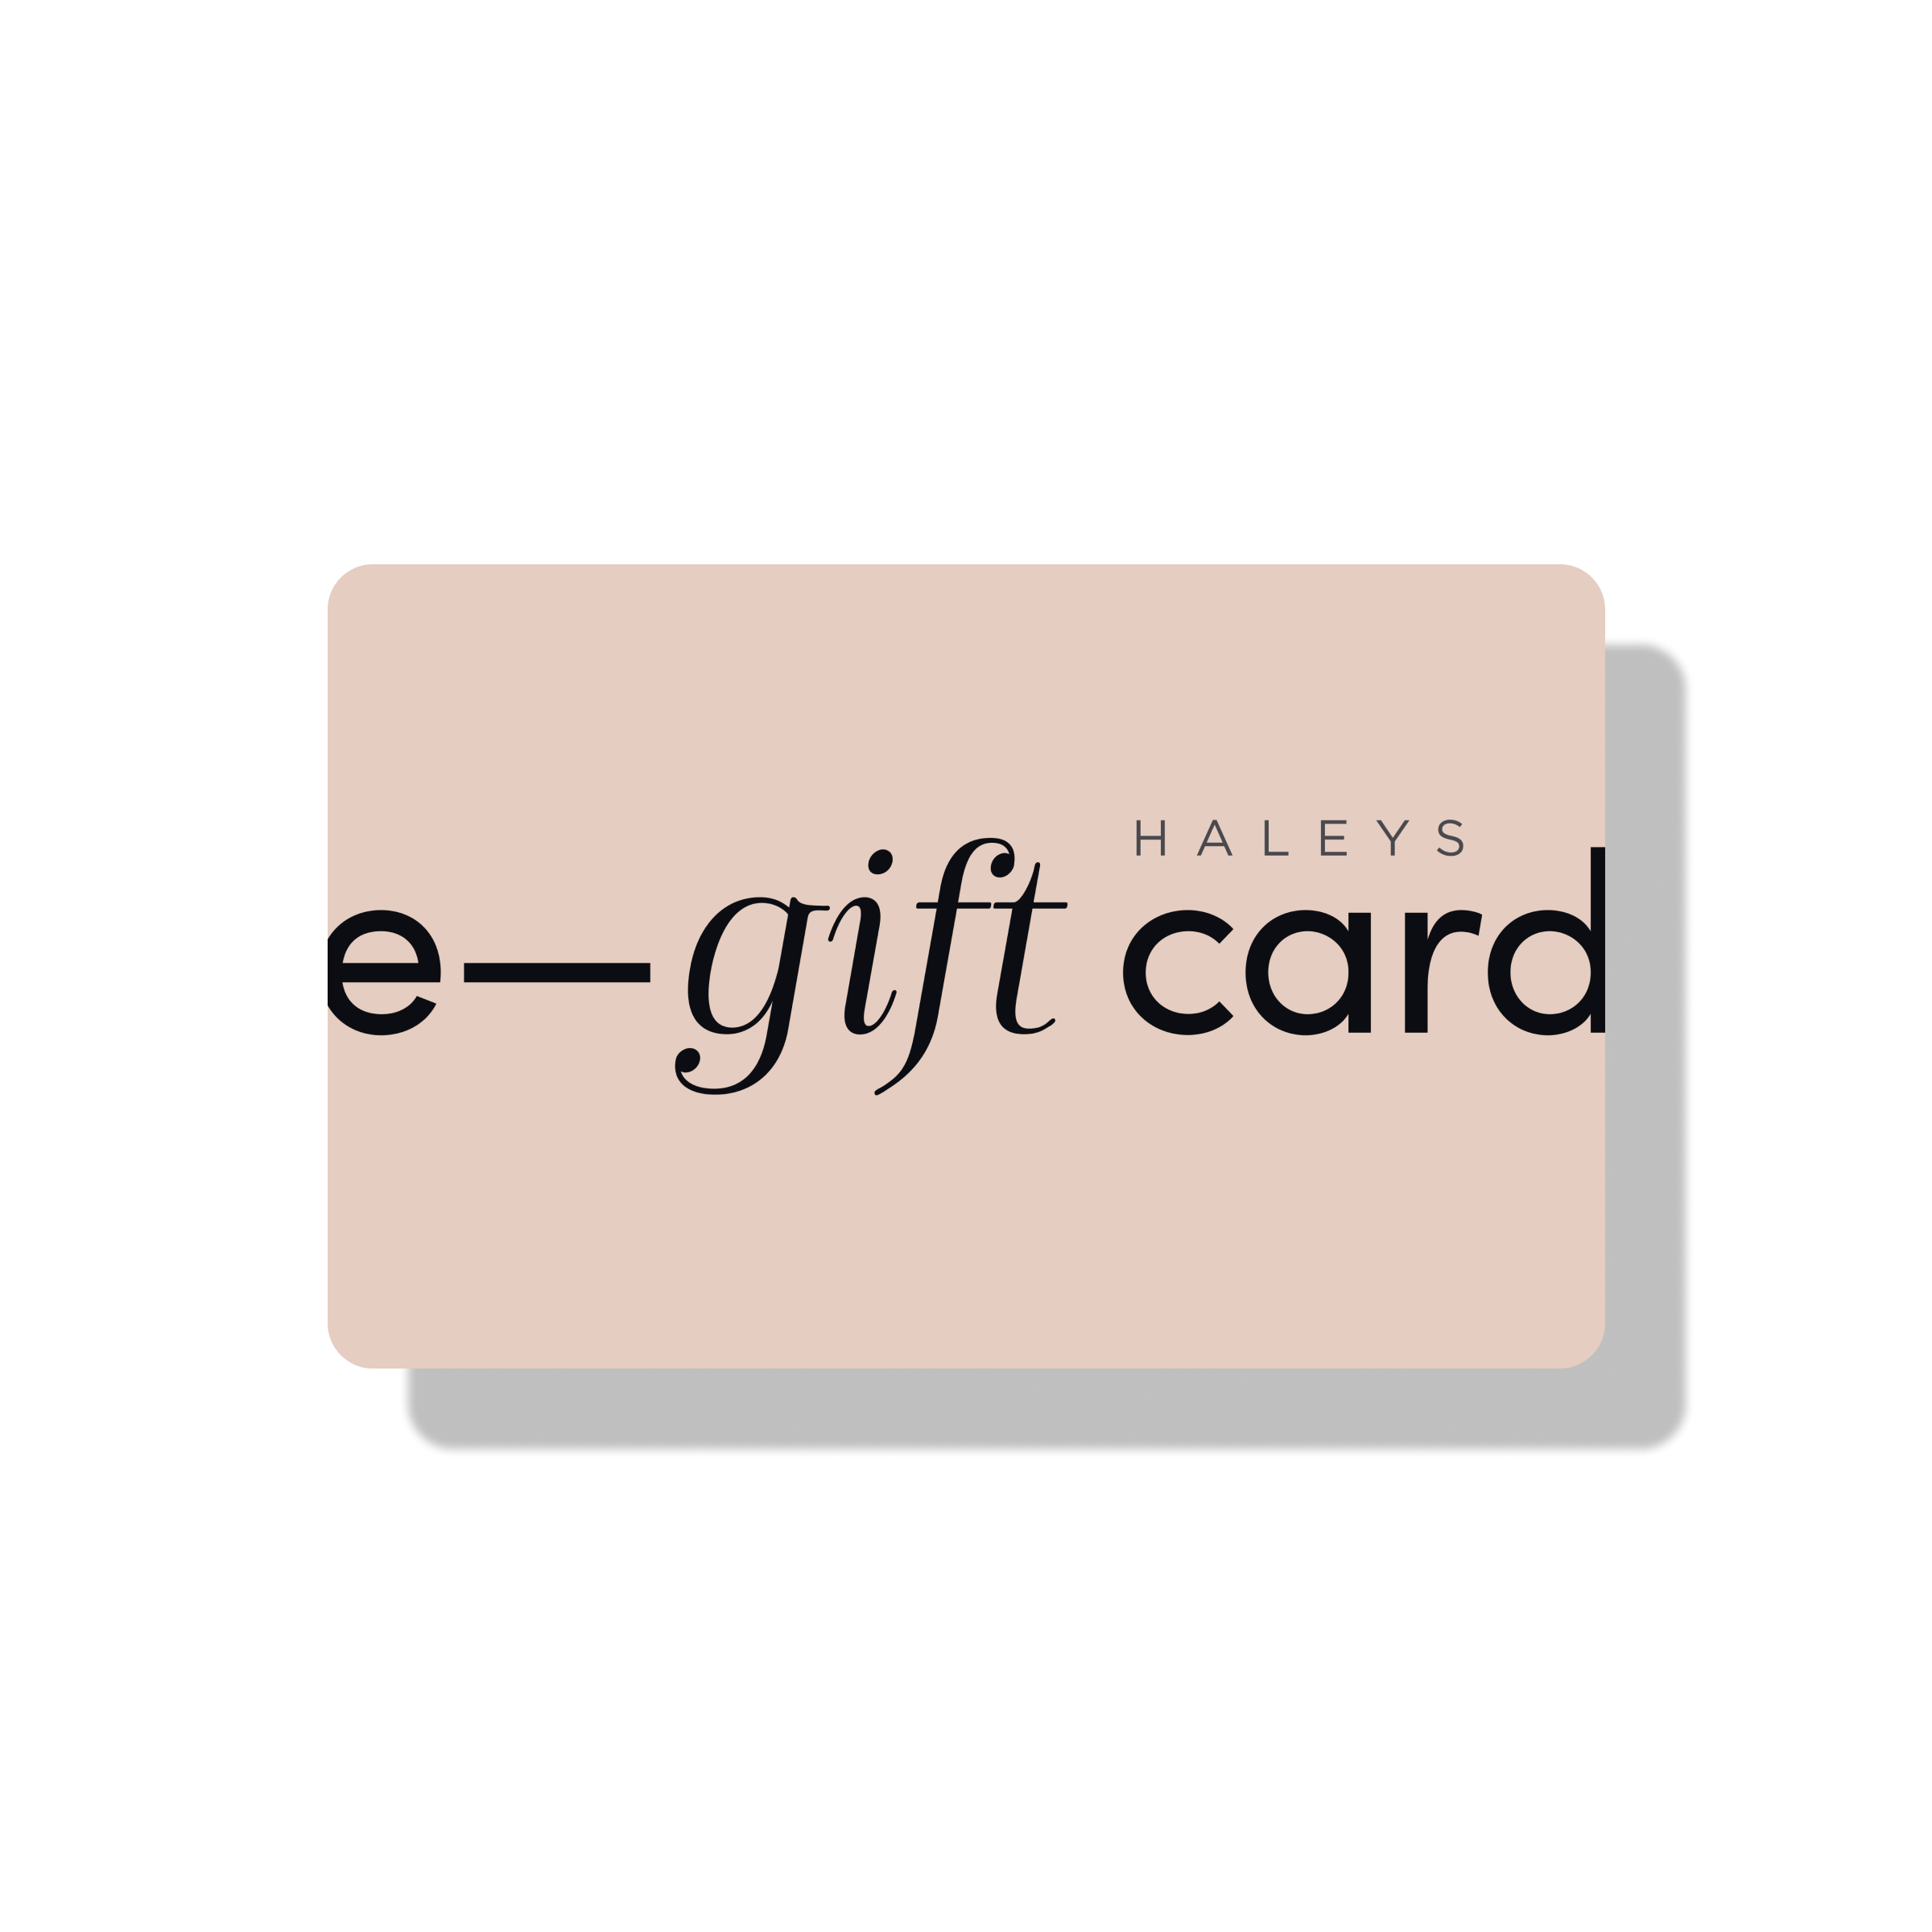 HALEYS e-gift card